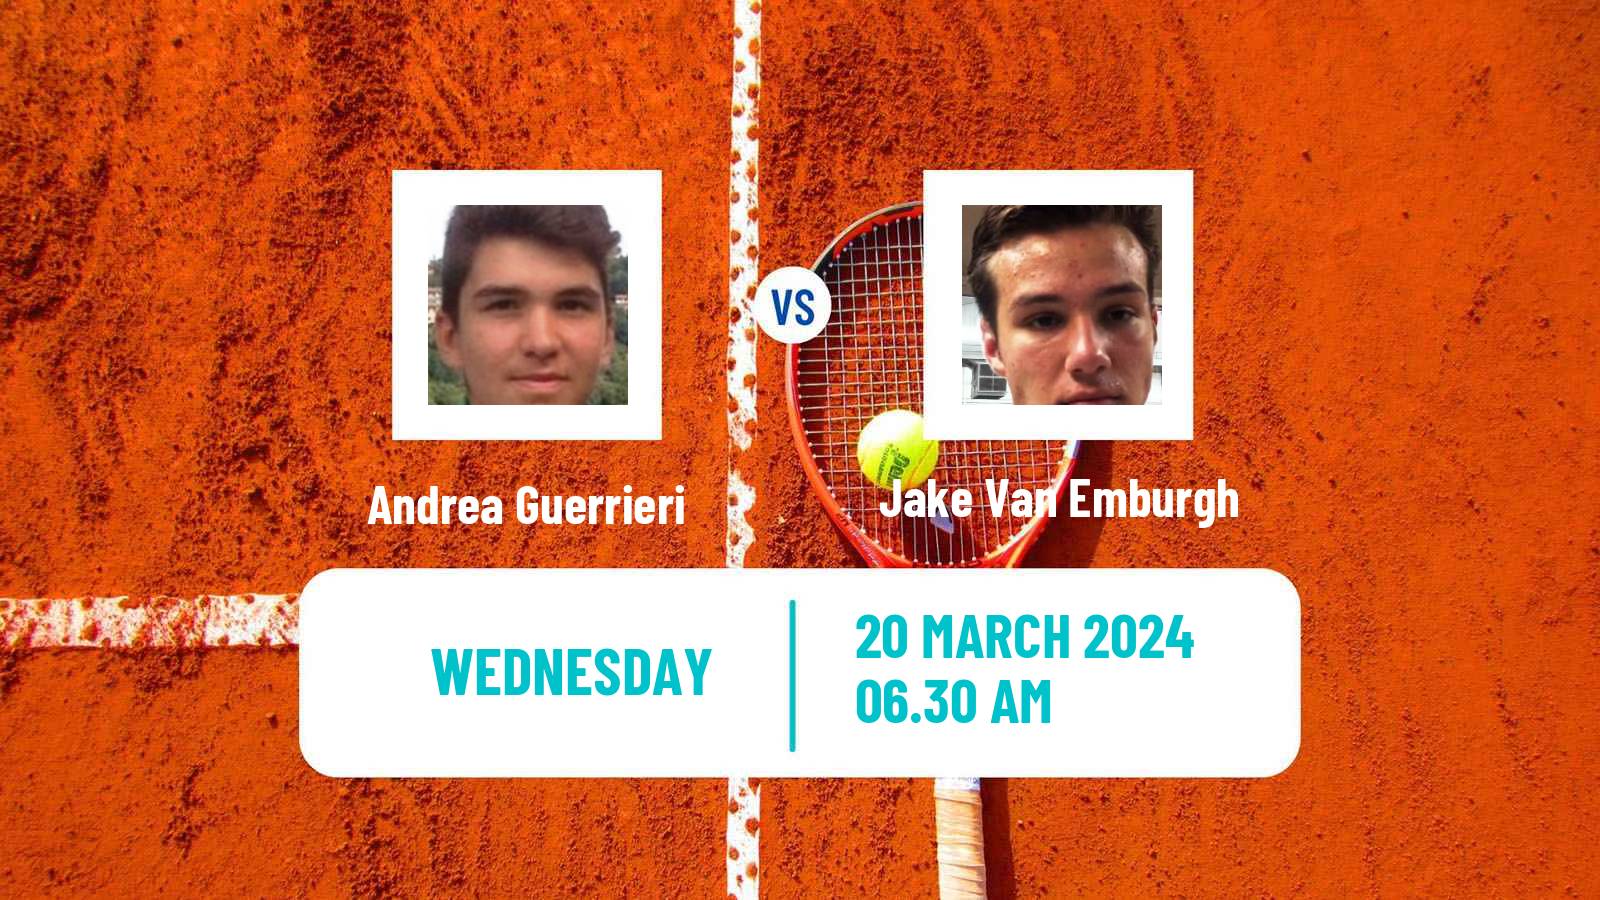 Tennis ITF M15 Heraklion 3 Men Andrea Guerrieri - Jake Van Emburgh